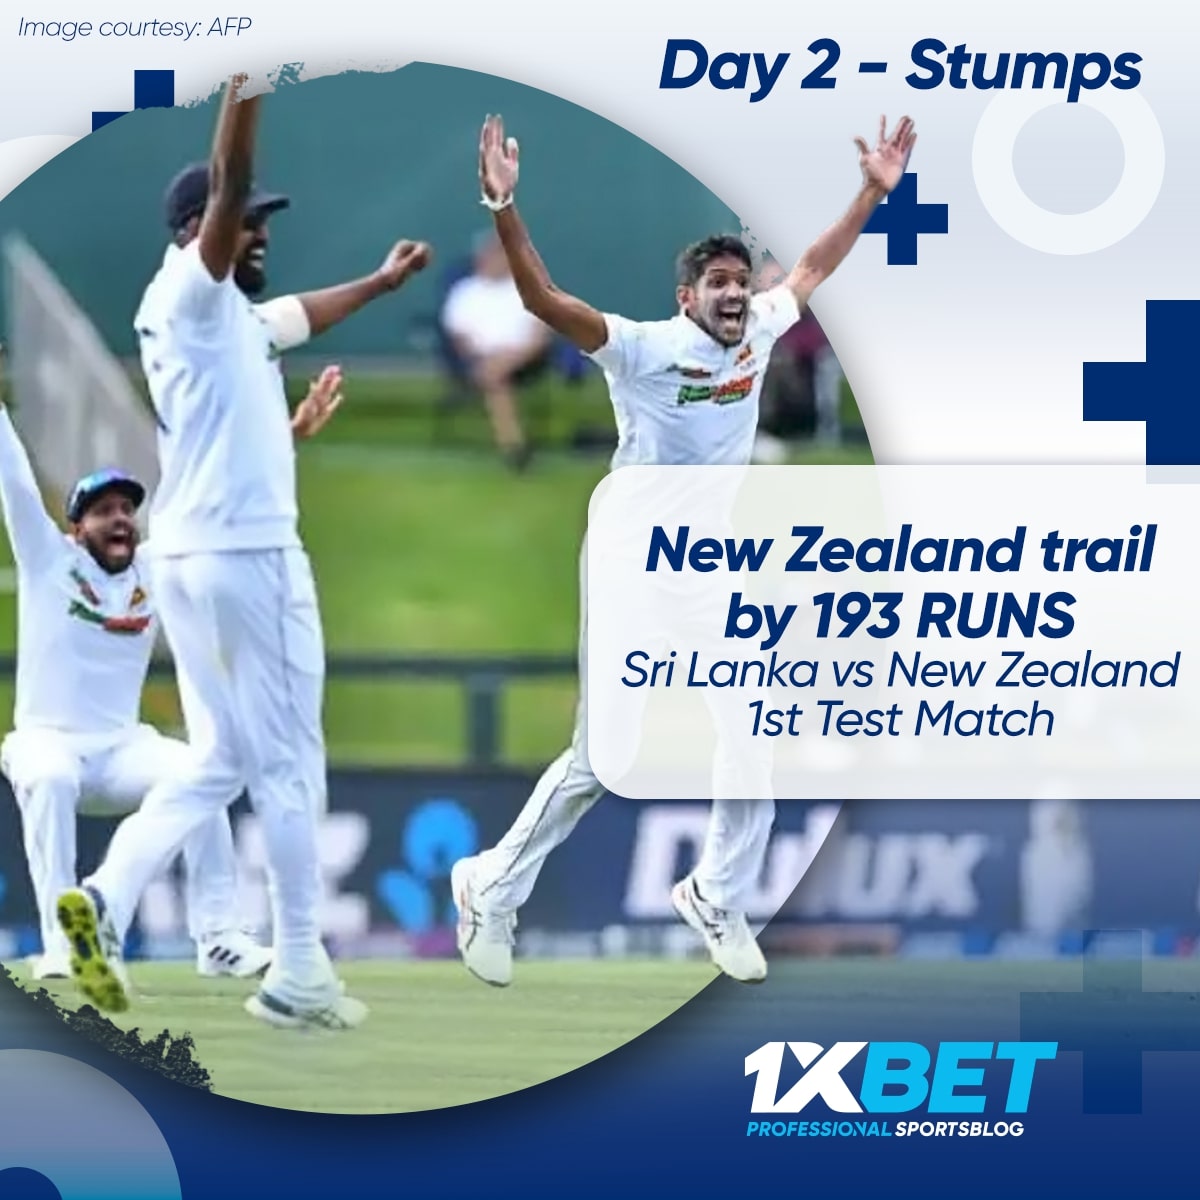 Day 2 - Stumps, New Zealand trail by 193 runs